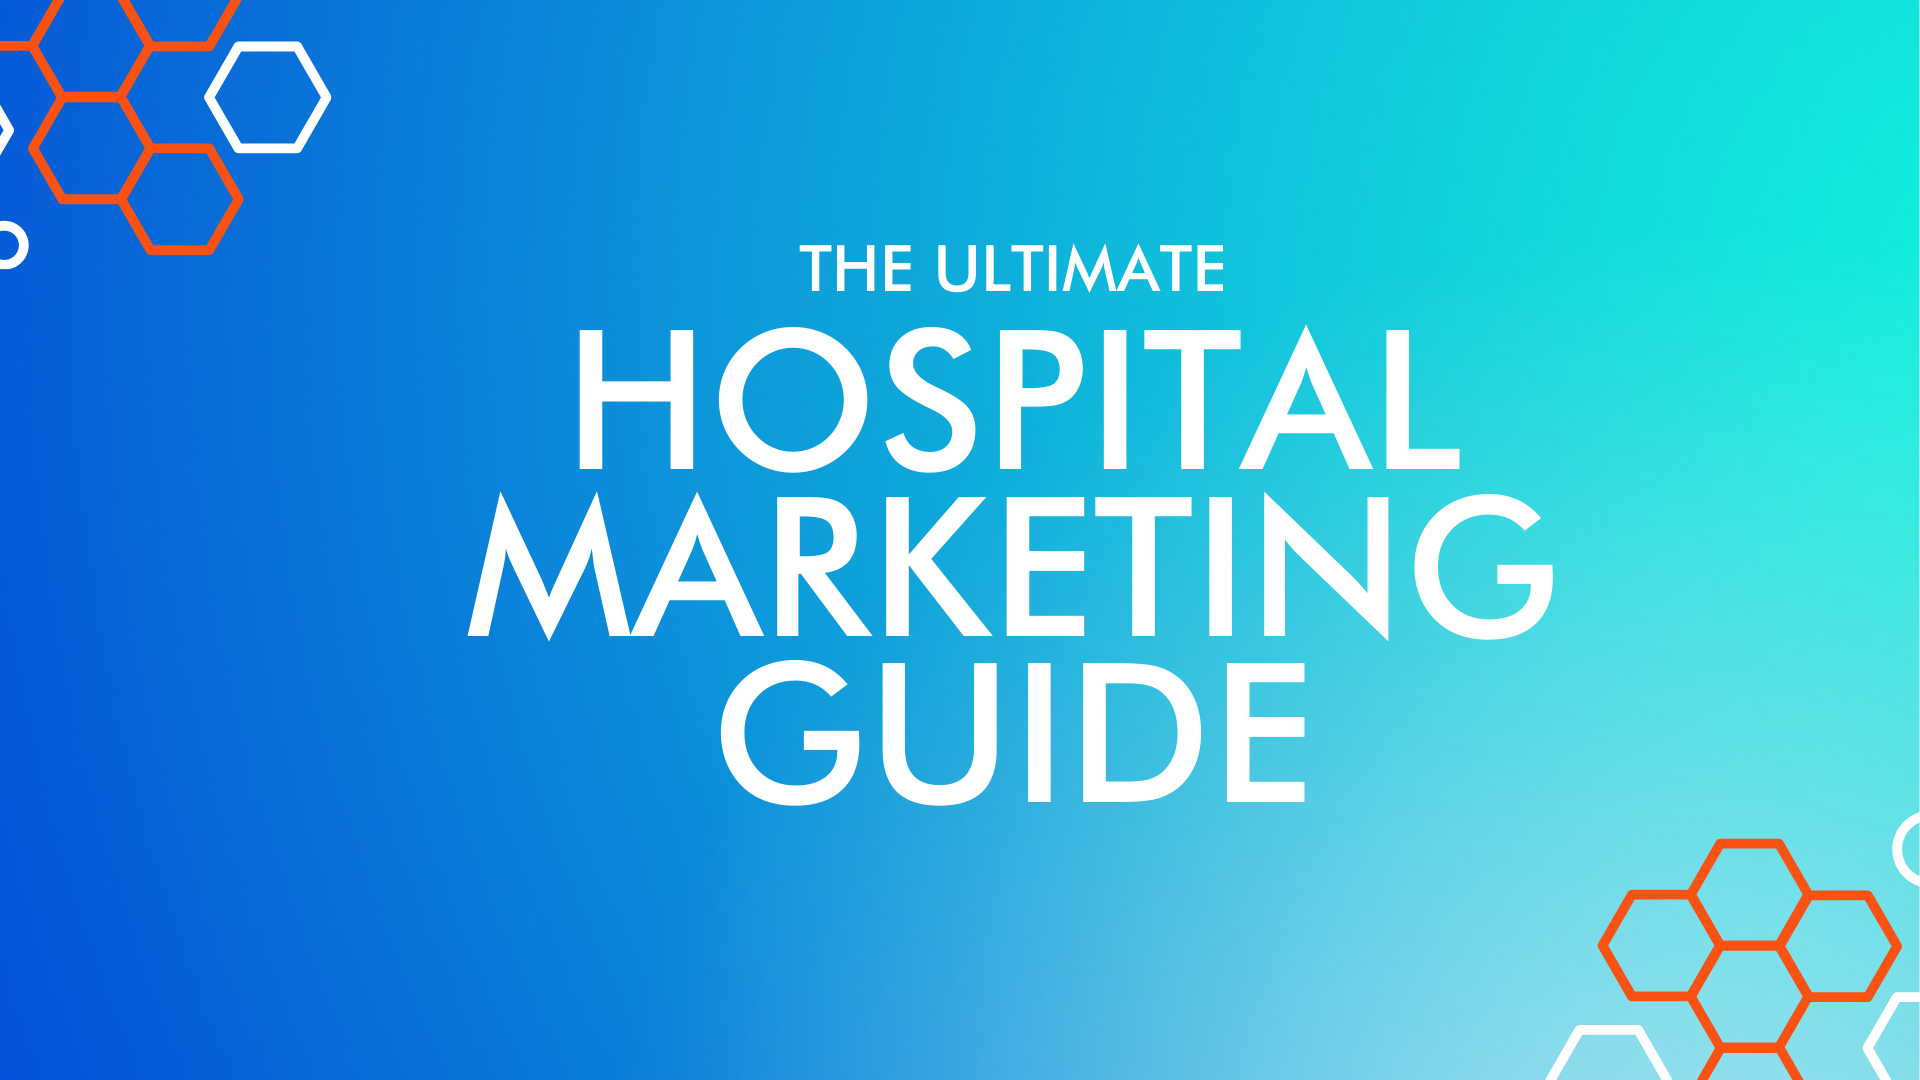 Hospital Marketing Guide for 2020 | Digital Logic